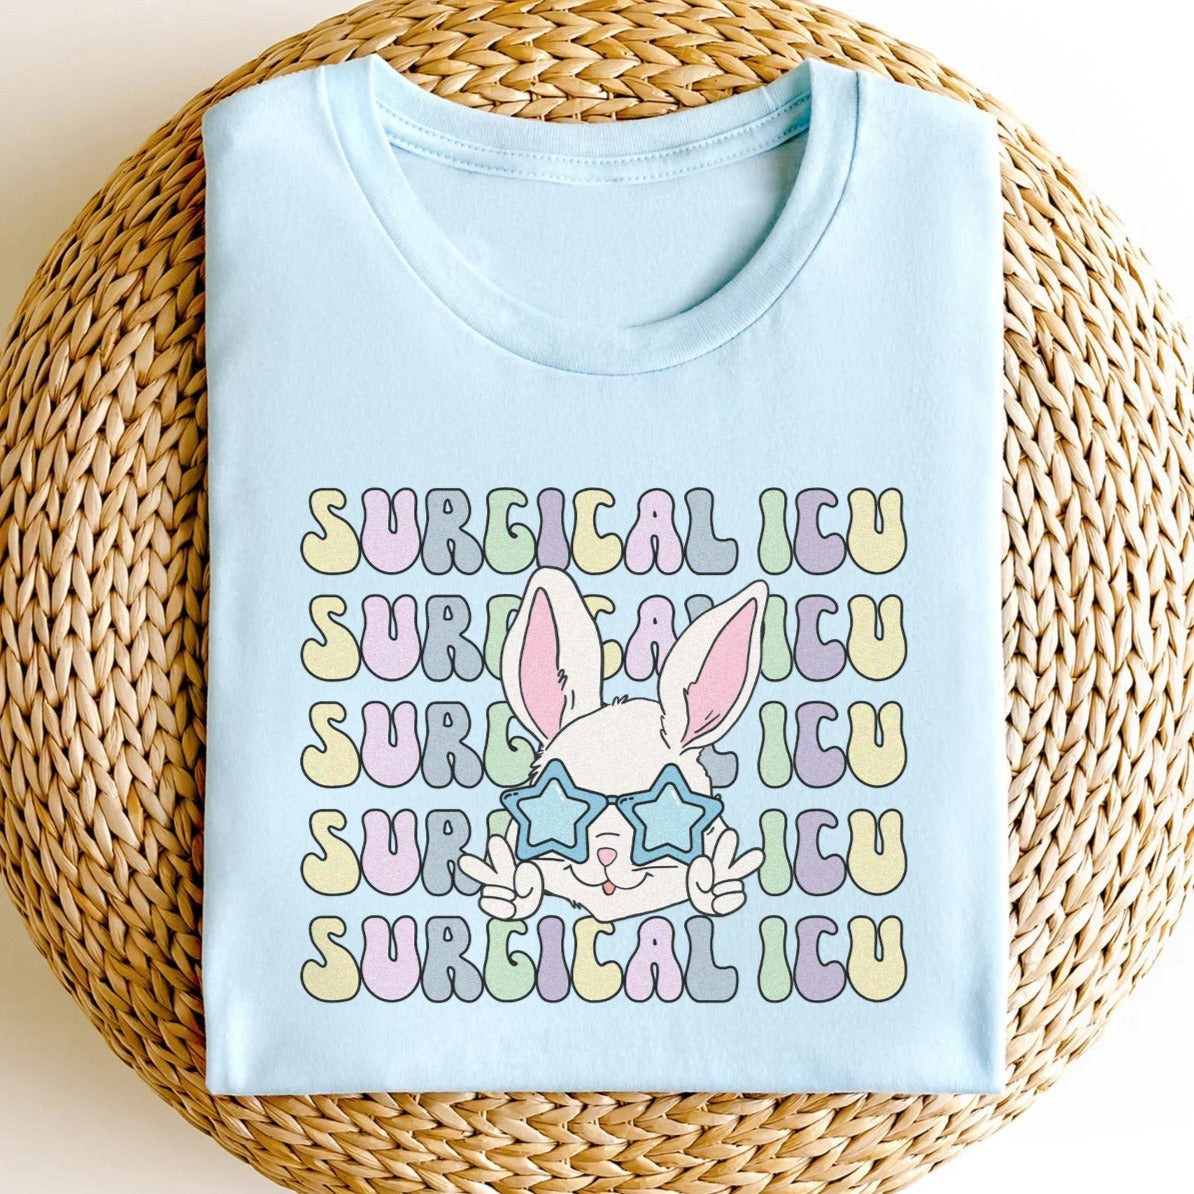 Retro Surgical ICU Easter Bunny T-Shirt